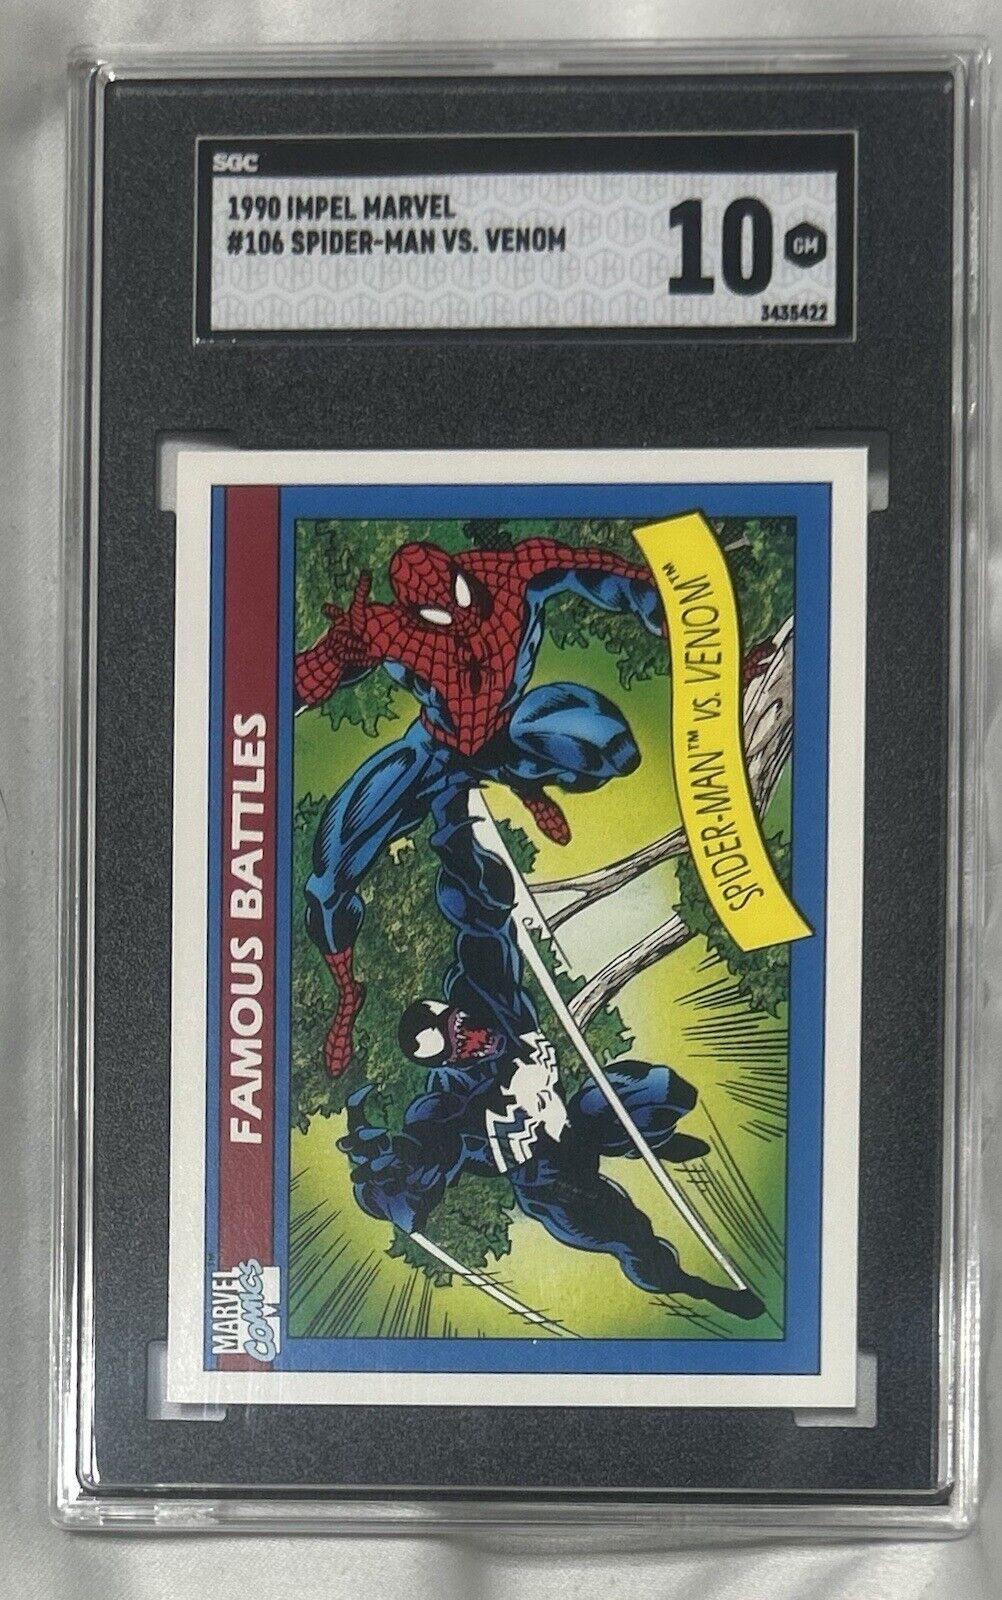 1990 Impel Marvel Universe Series 1 Trading Card spiderman vs venom #106 SGC 10